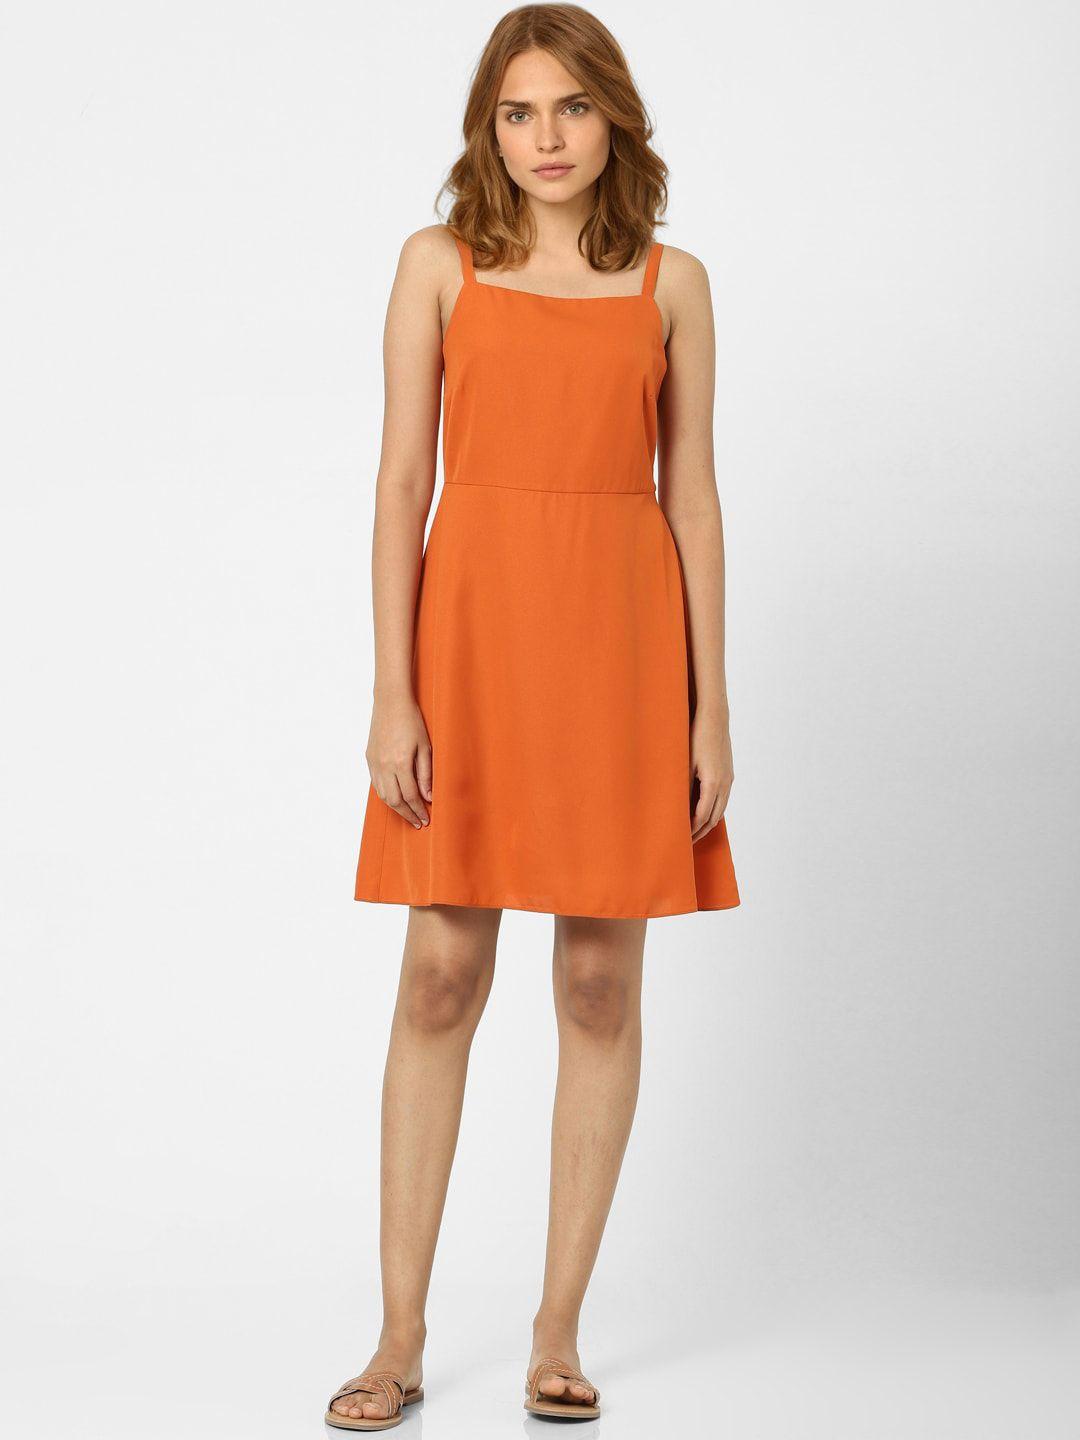 vero moda women orange solid dress